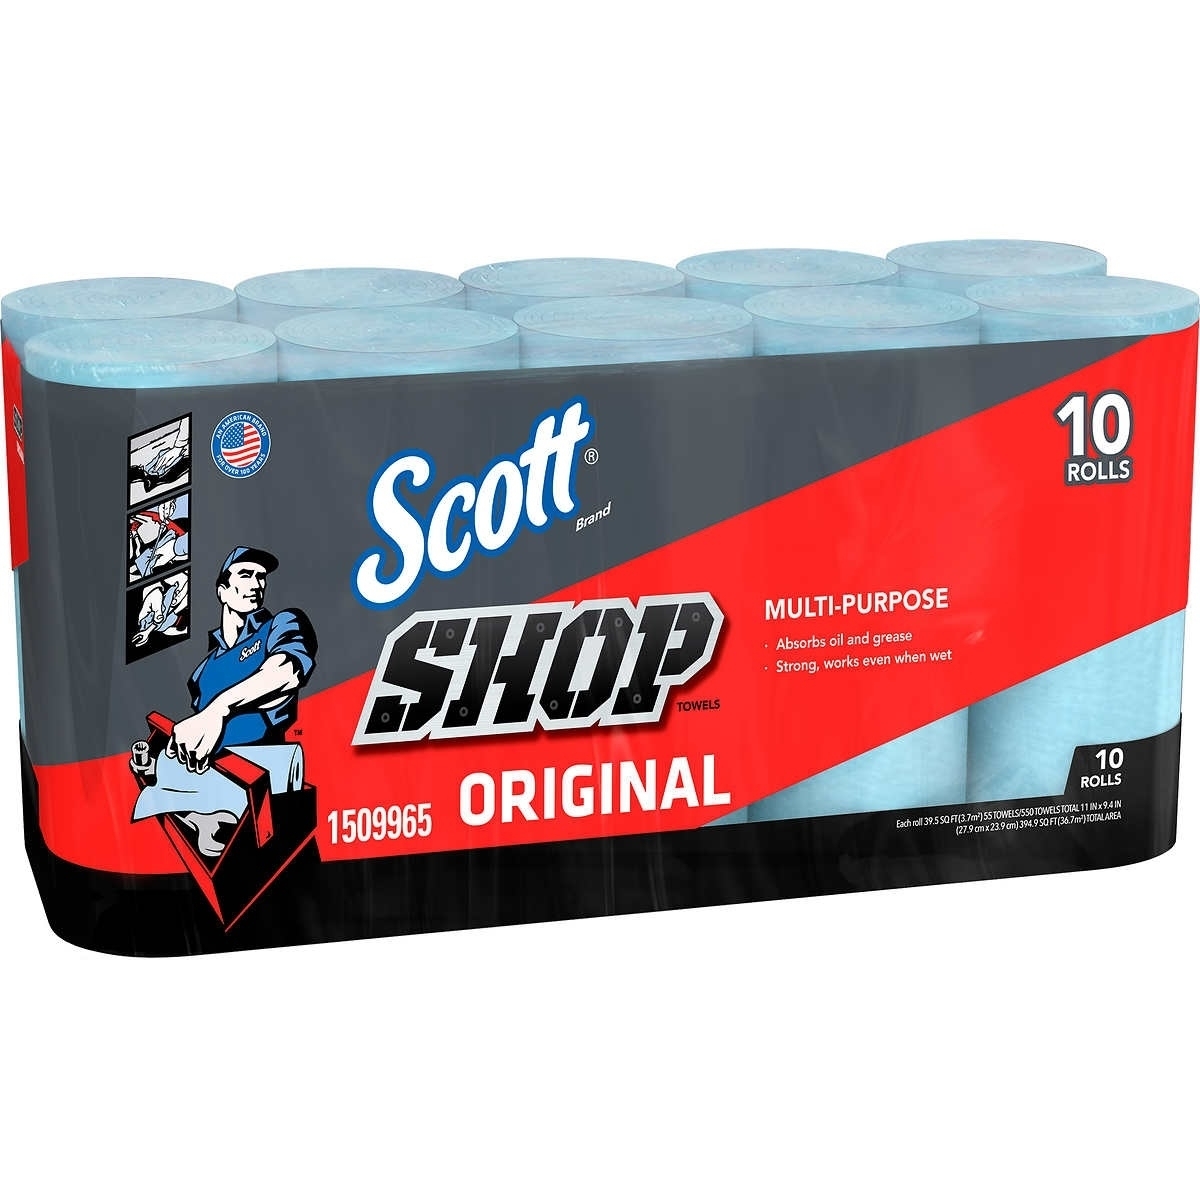 Scott Shop Towels, Original Multi-Purpose, Blue, 55 Towels/Roll (10 Rolls)